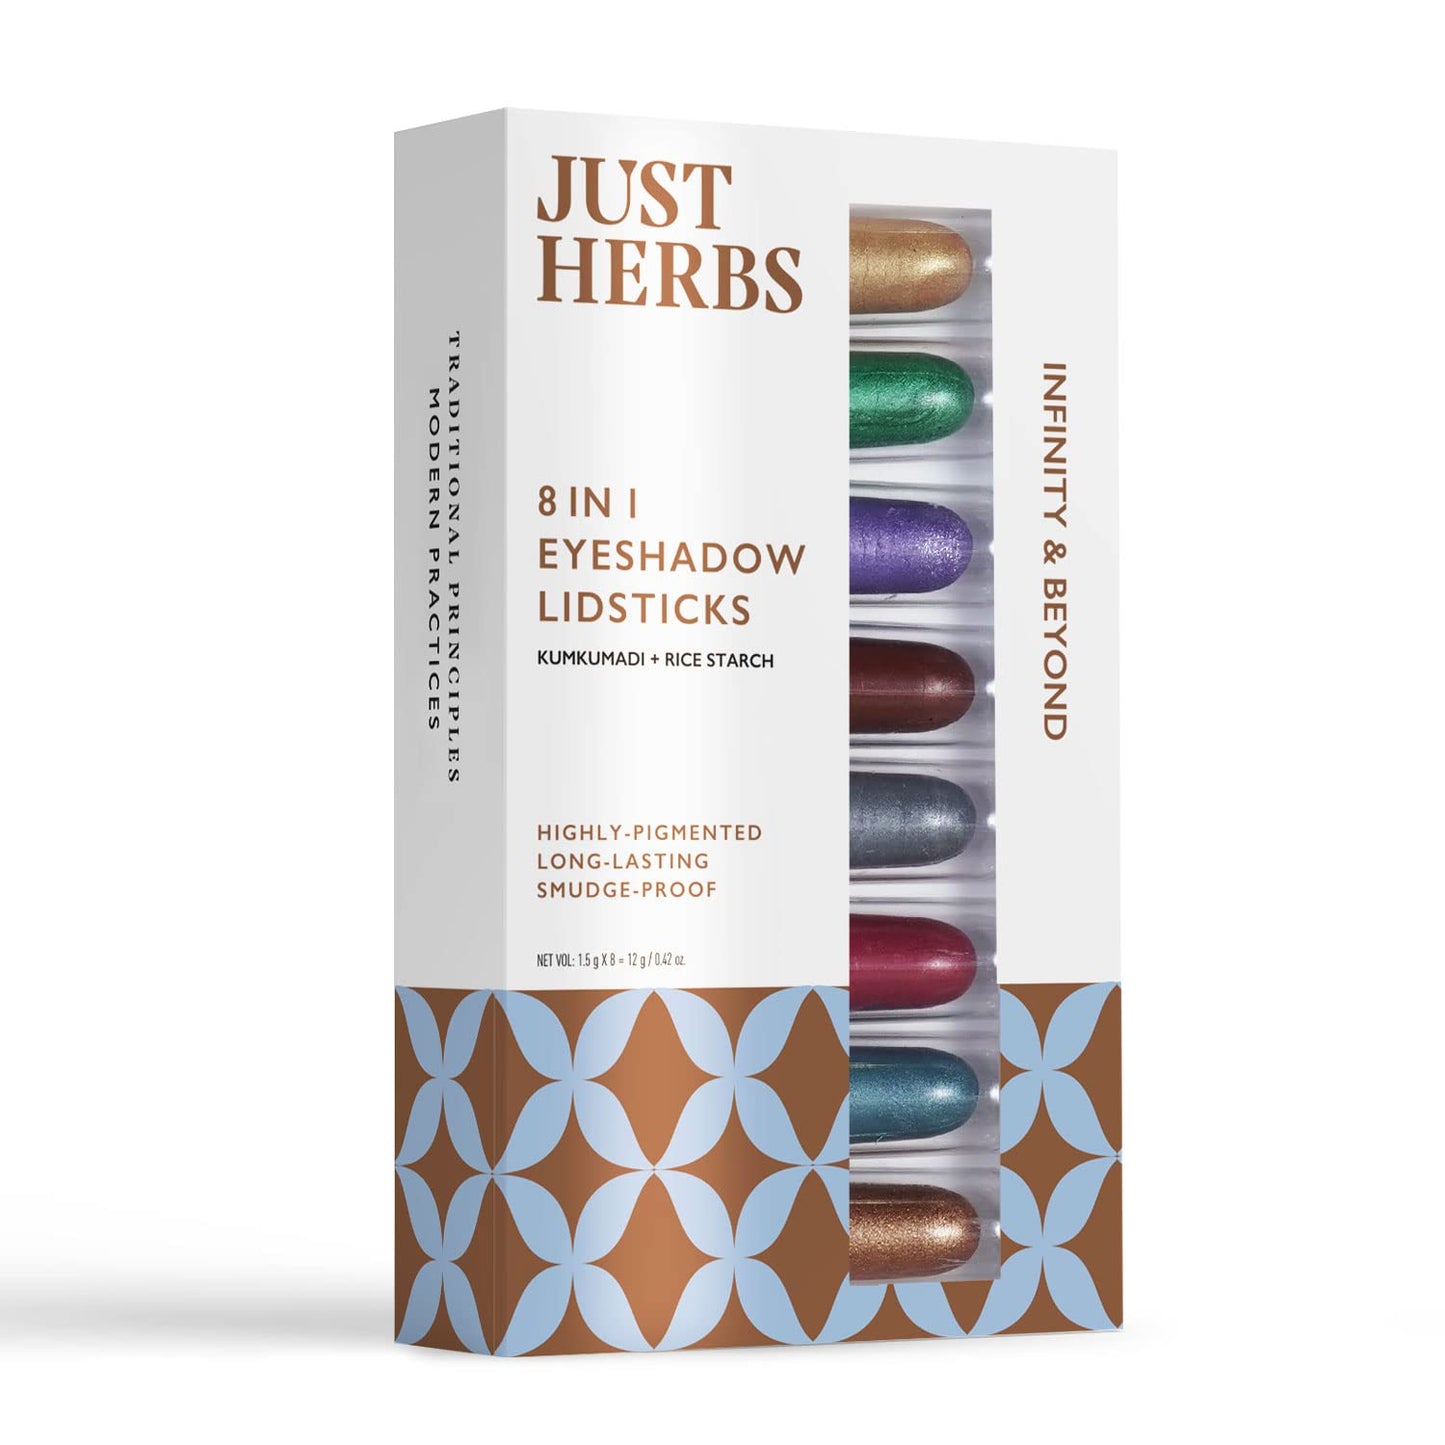 Just herbs 8 in 1 Herbal Metallic-shimmer finish, Long Lasting & Ultra Smooth Eye Shadow Lidsticks with Kumkumadi - 12gm (Infinity & Beyond)